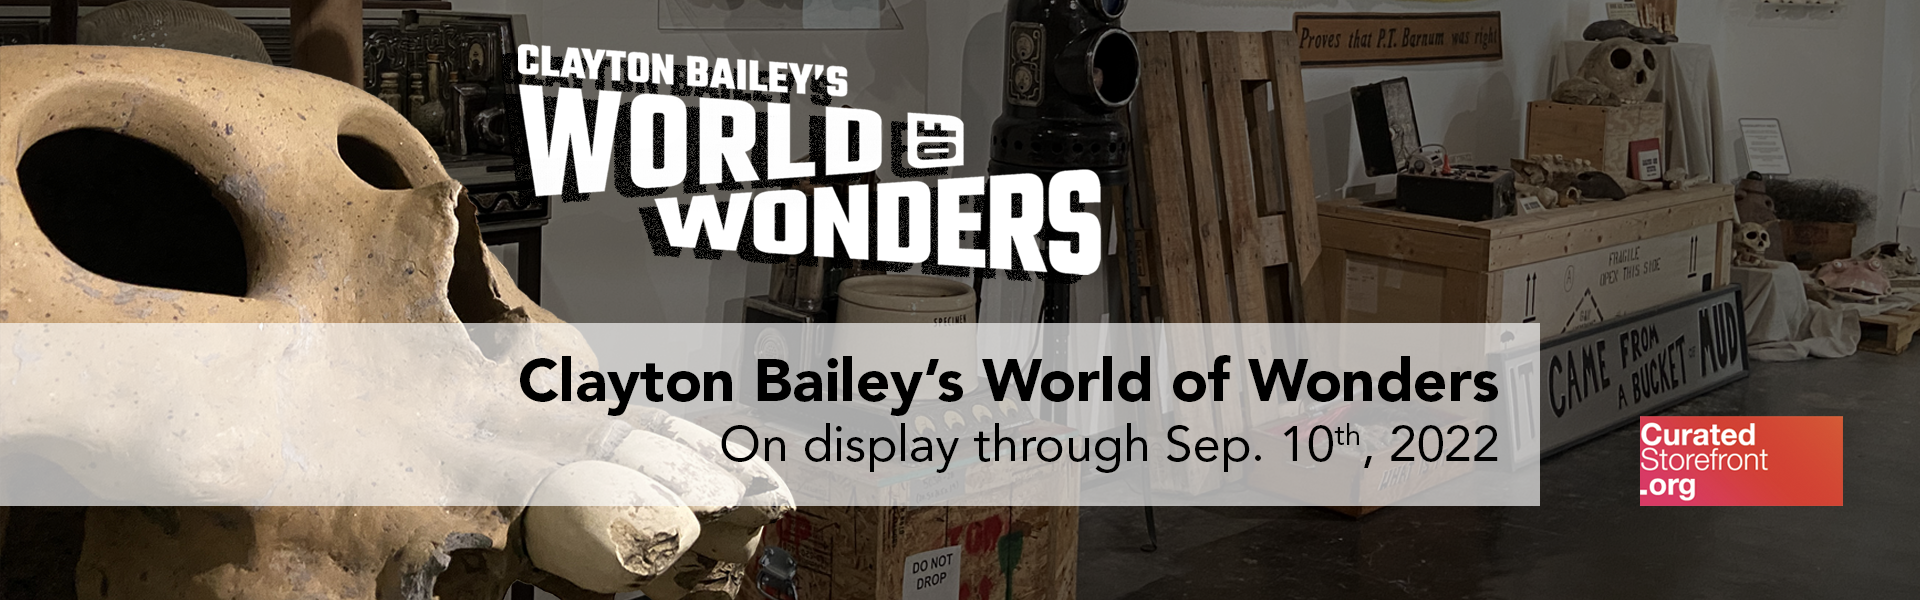 Clayton Bailey's World of Wonders on display through September 3rd